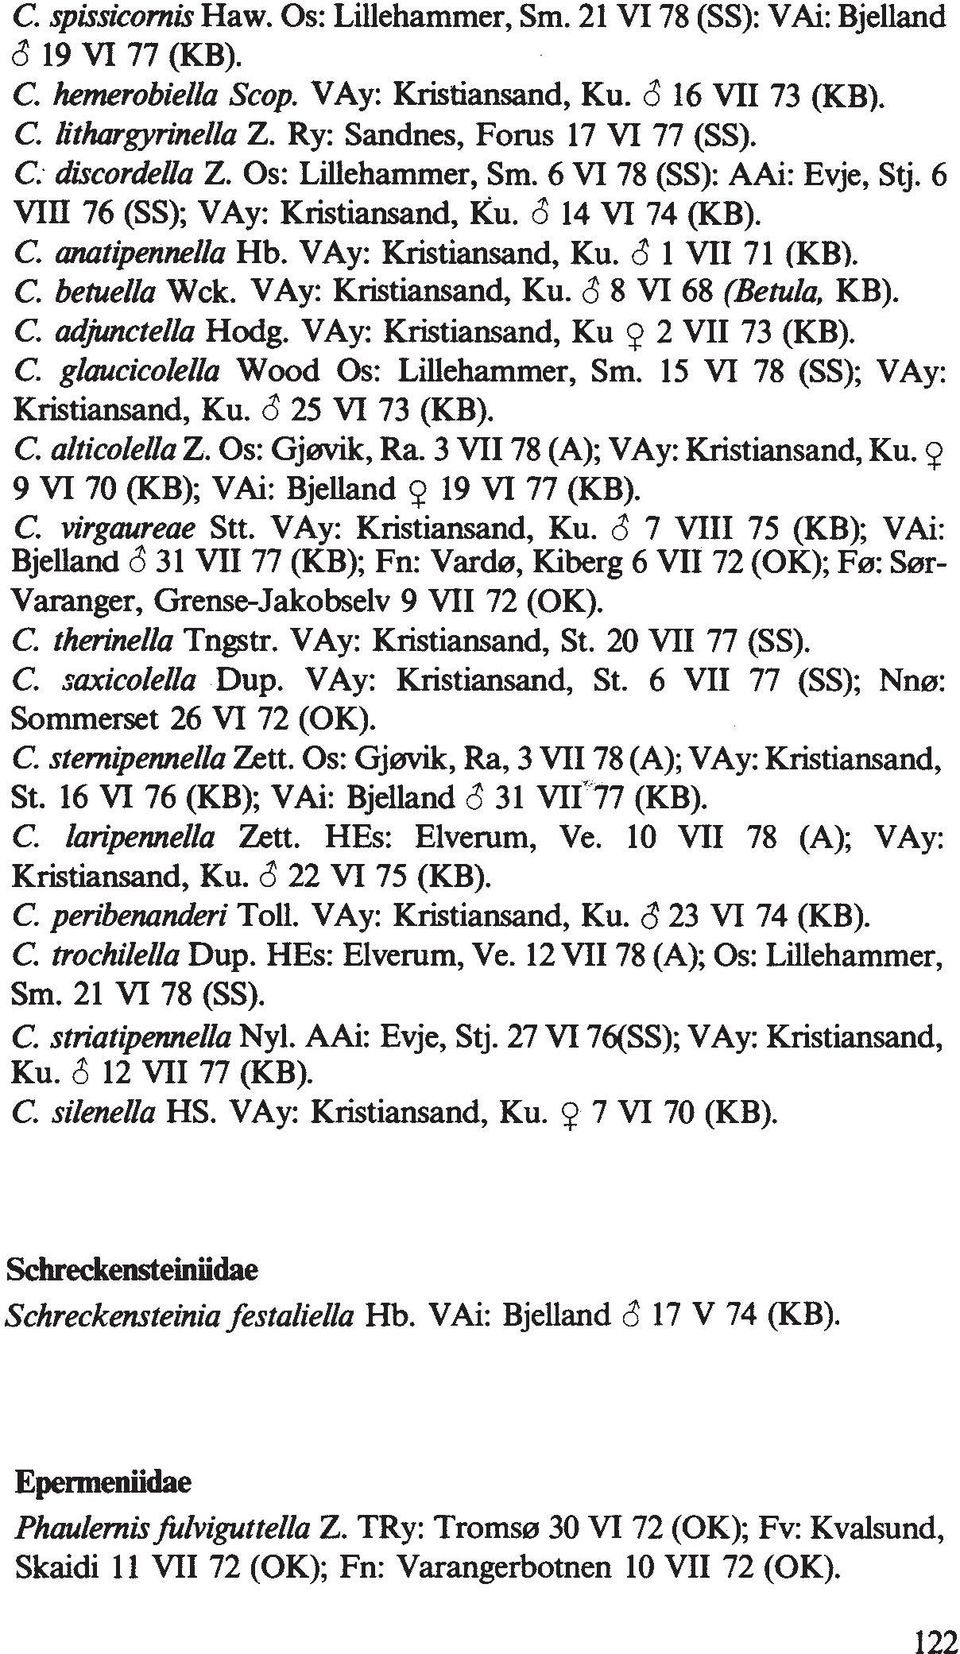 C. betuella Wck. VAy: Kristiansand, Ku. $ 8 VI 68 (Berula, KB). C. ad'ctella Hodg. VAy: Kristiansand, Ku Q 2 VII 73 (KB). C. glaucicolella Wood 0s: Lillehammer, Sm.